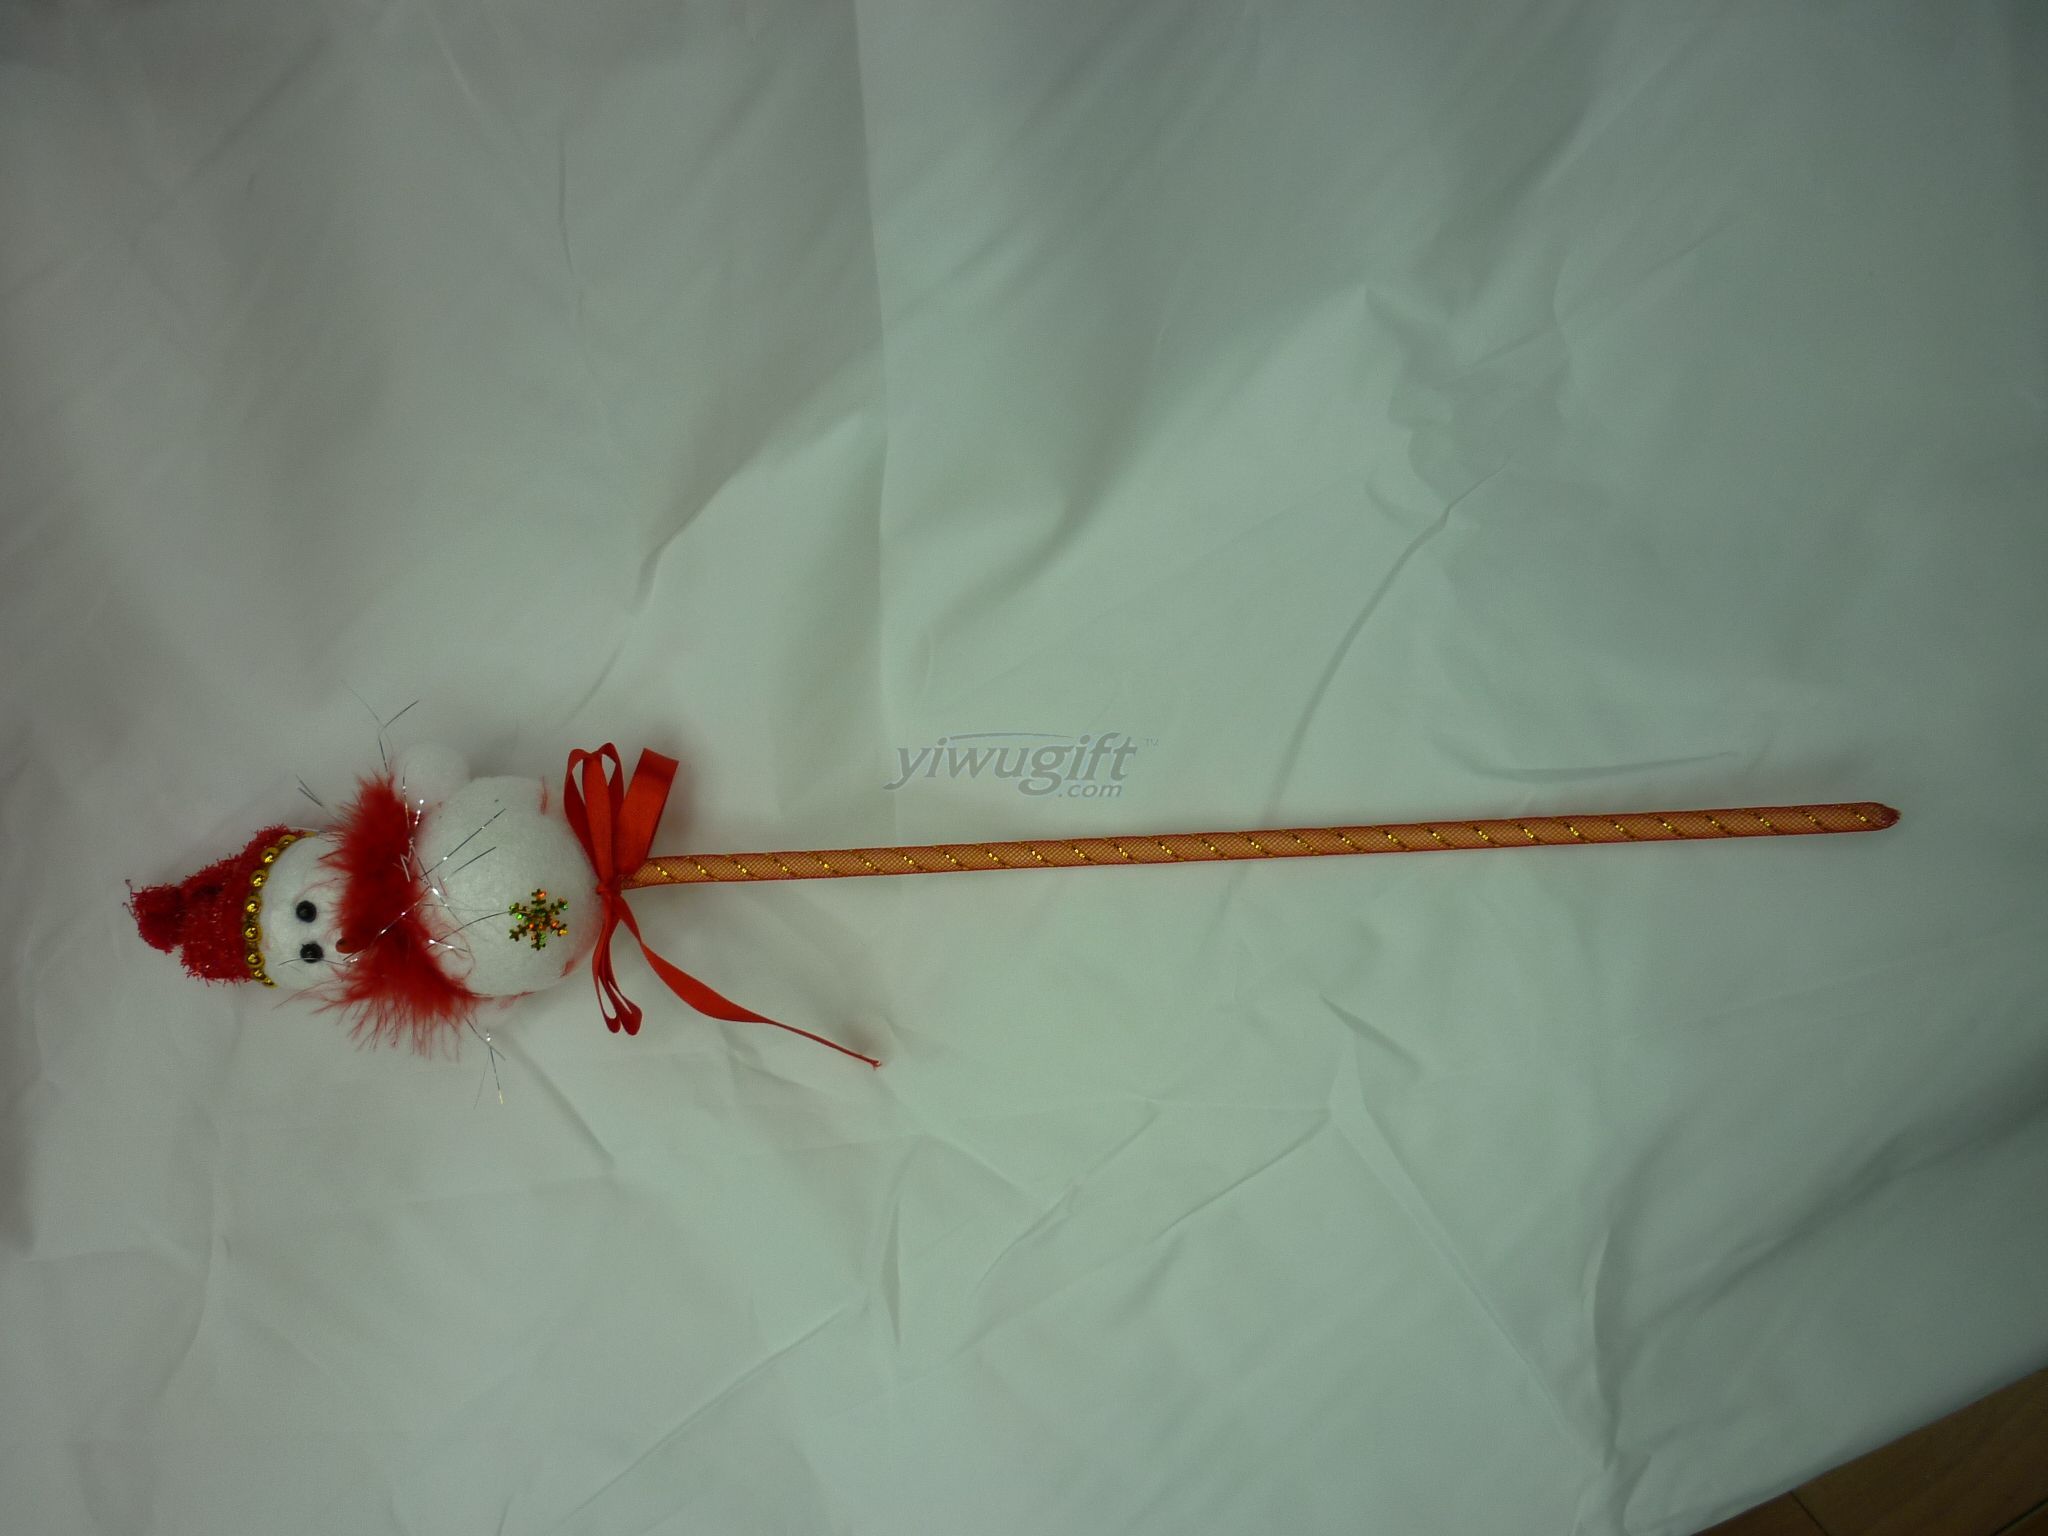 A snowman stick